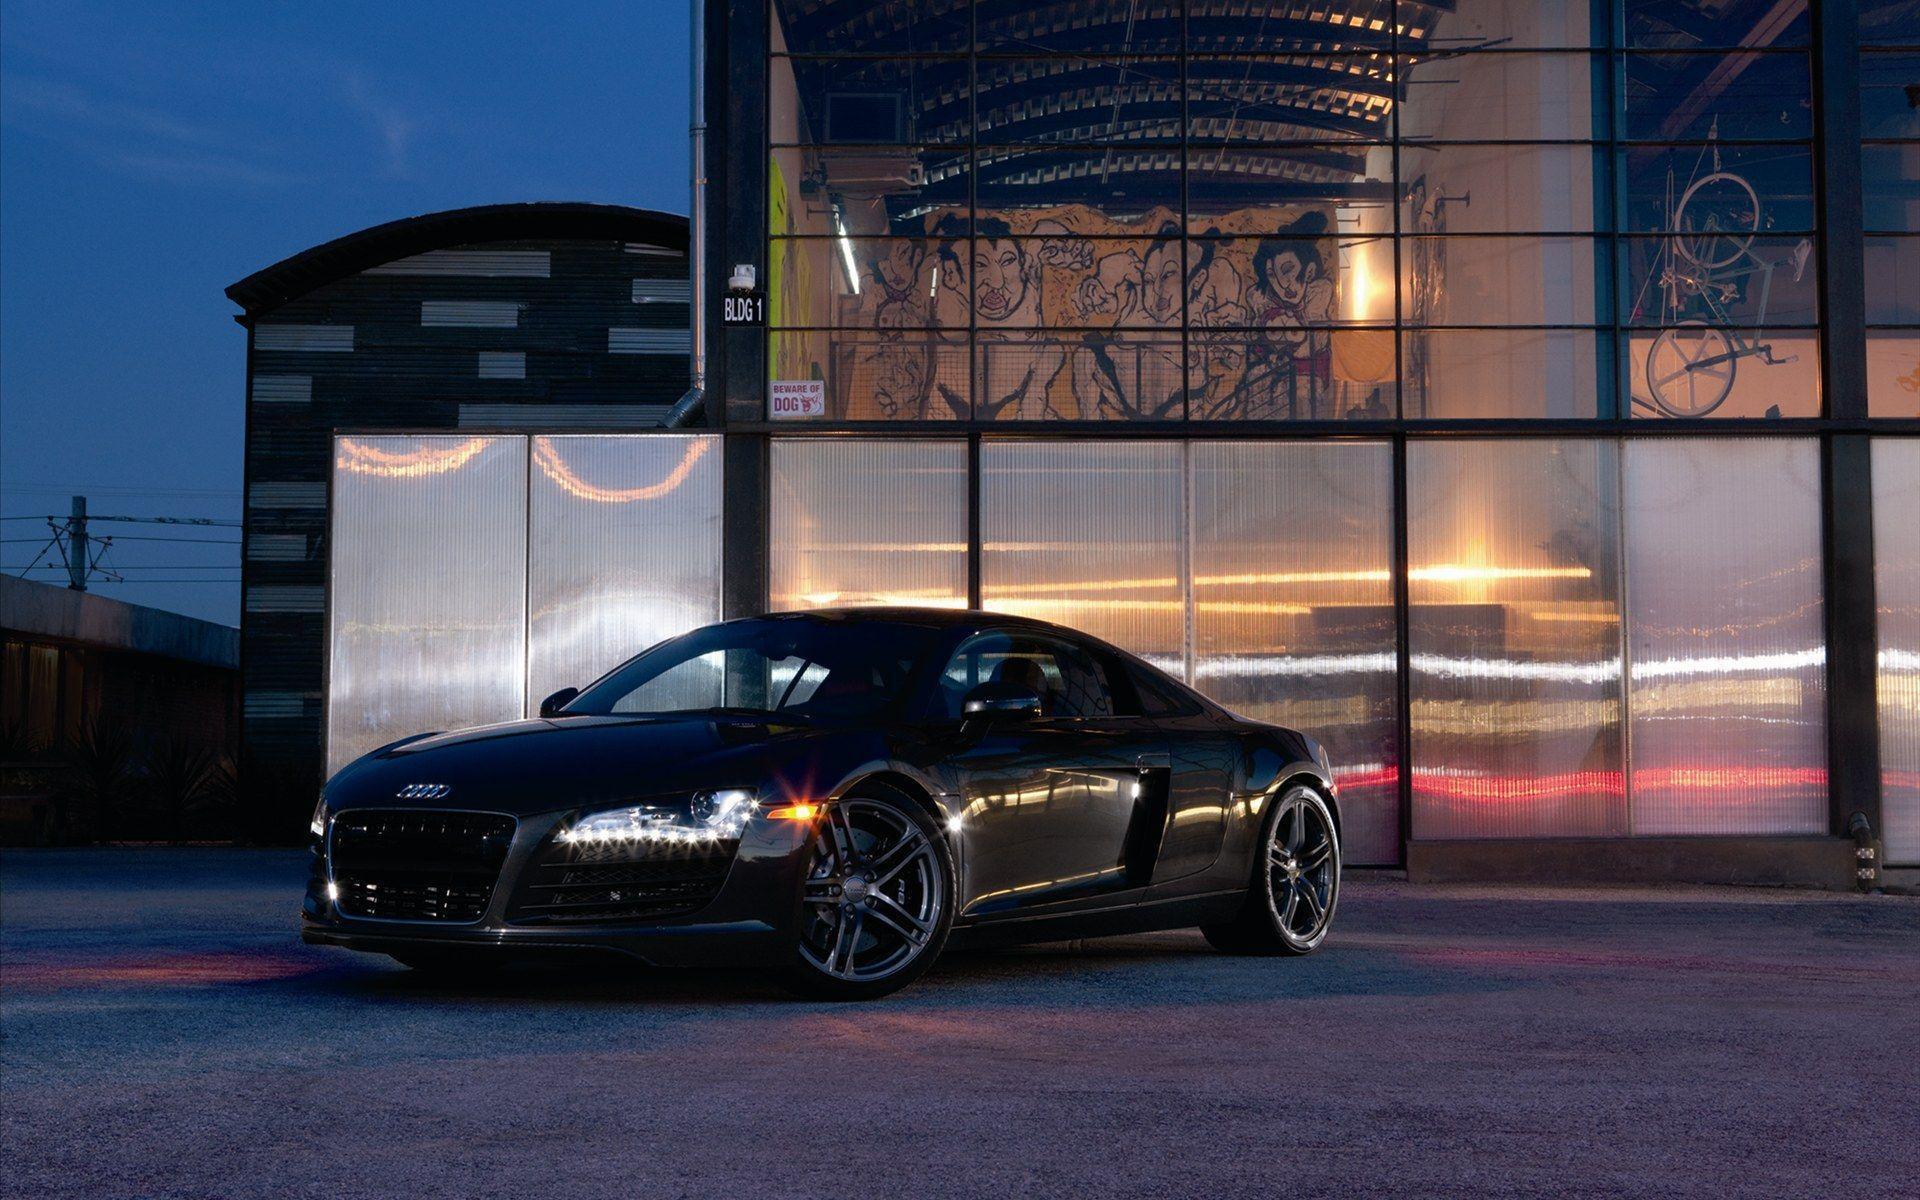 Audi R8 Matte Black. High Definition Wallpaper, High Definition